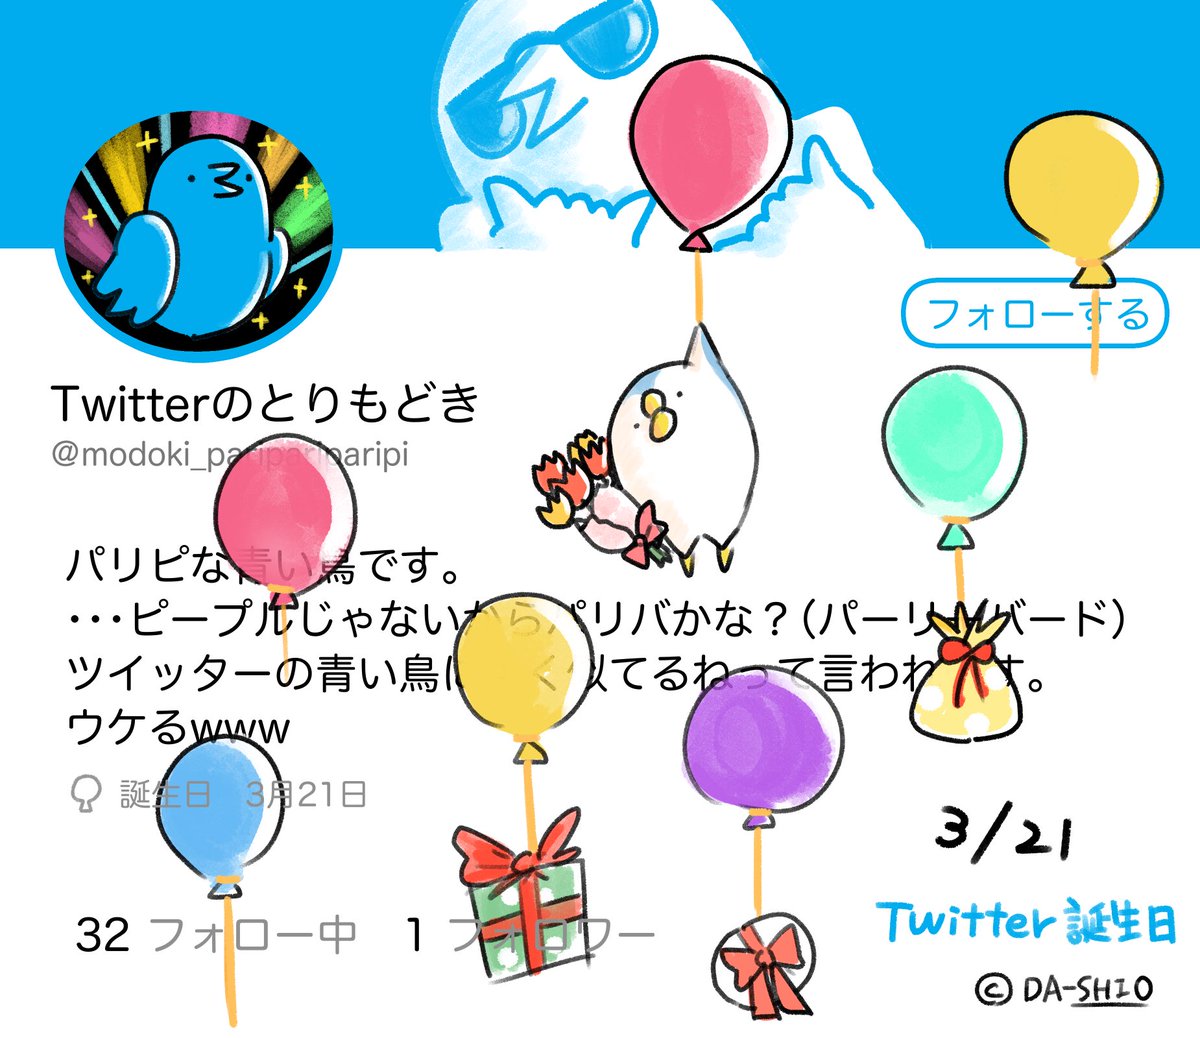 Twitter誕生日